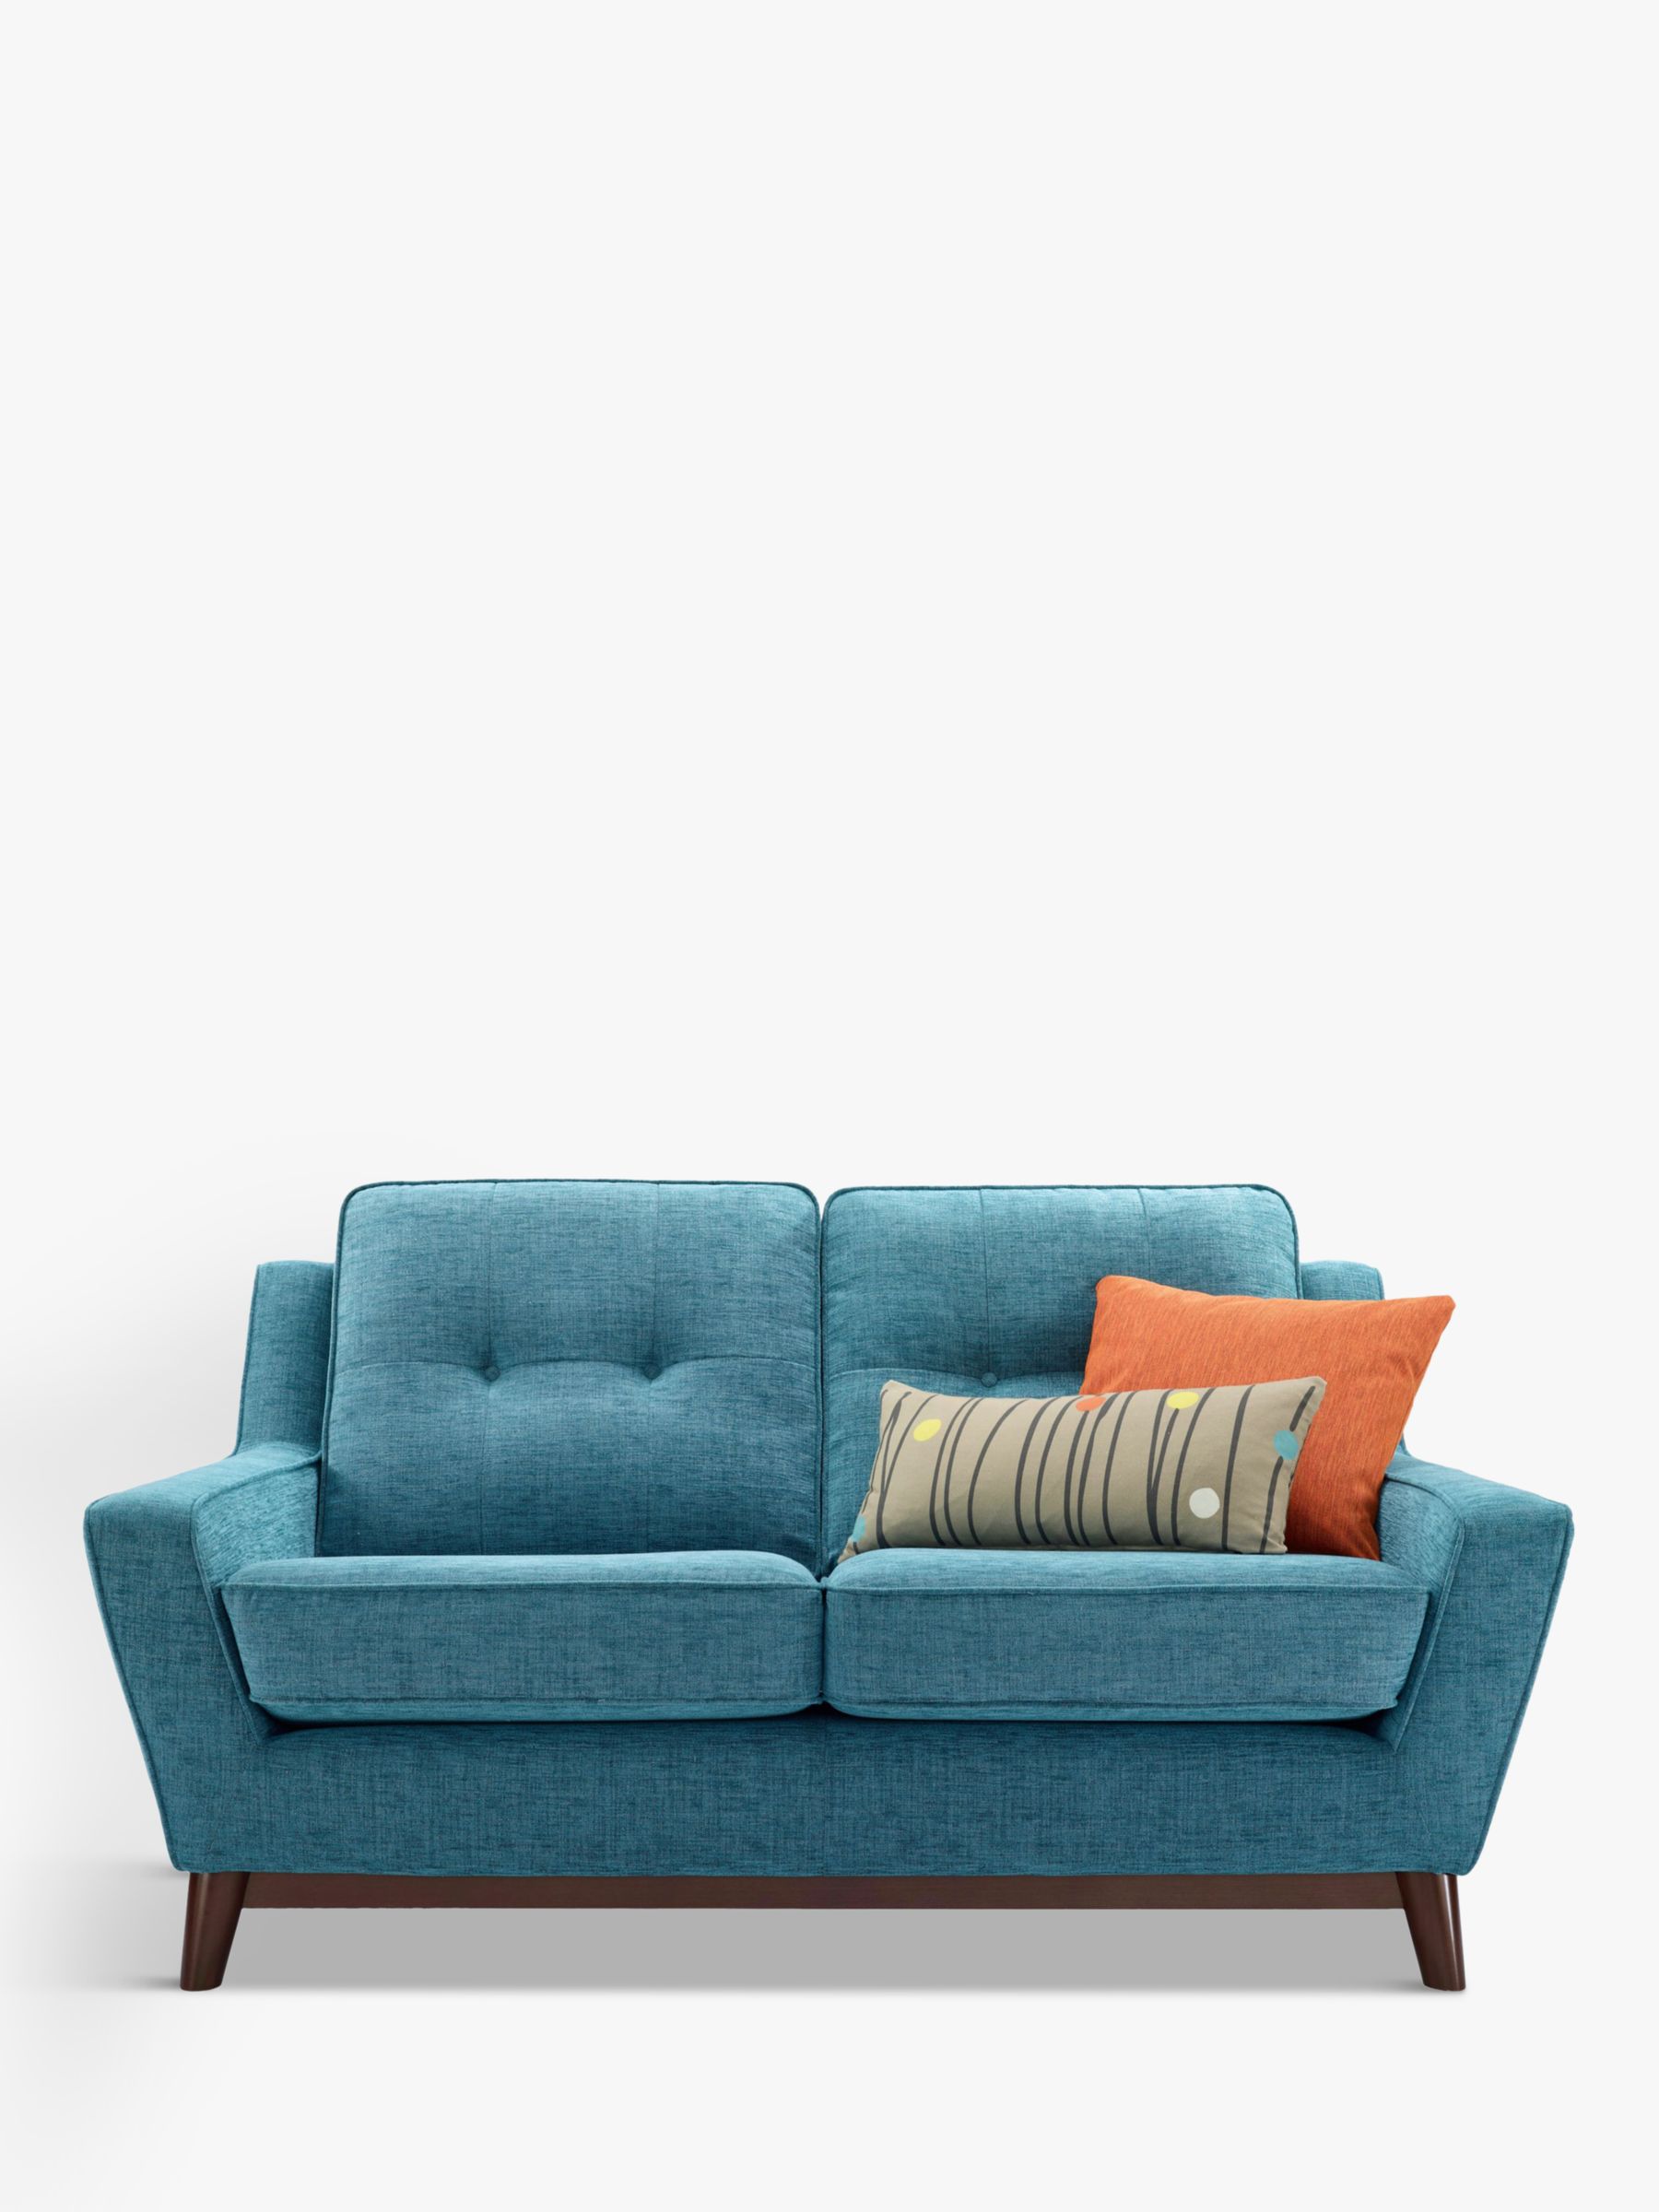 G Plan Vintage The Fifty Three Small Sofa, Fleck Blue, width 159cm